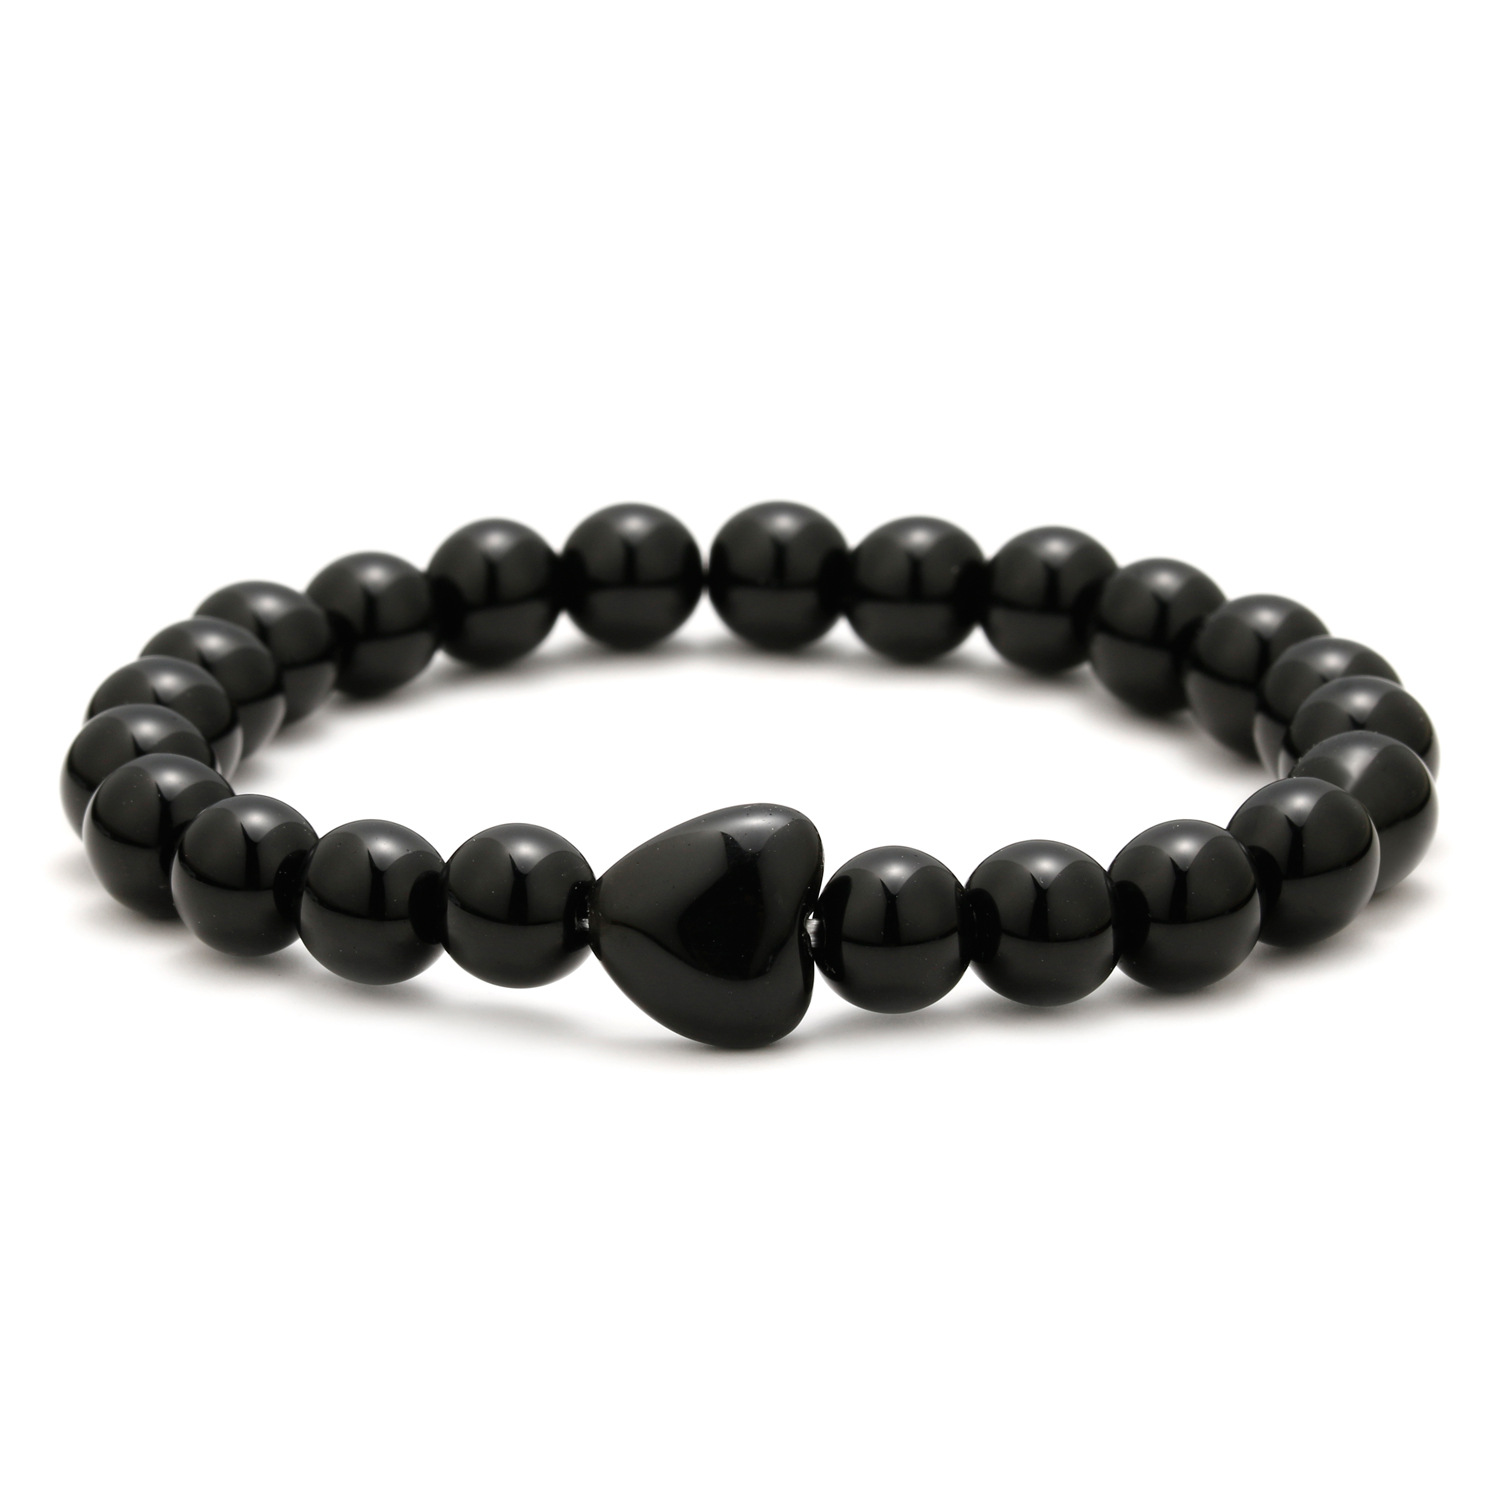 6:Black beads